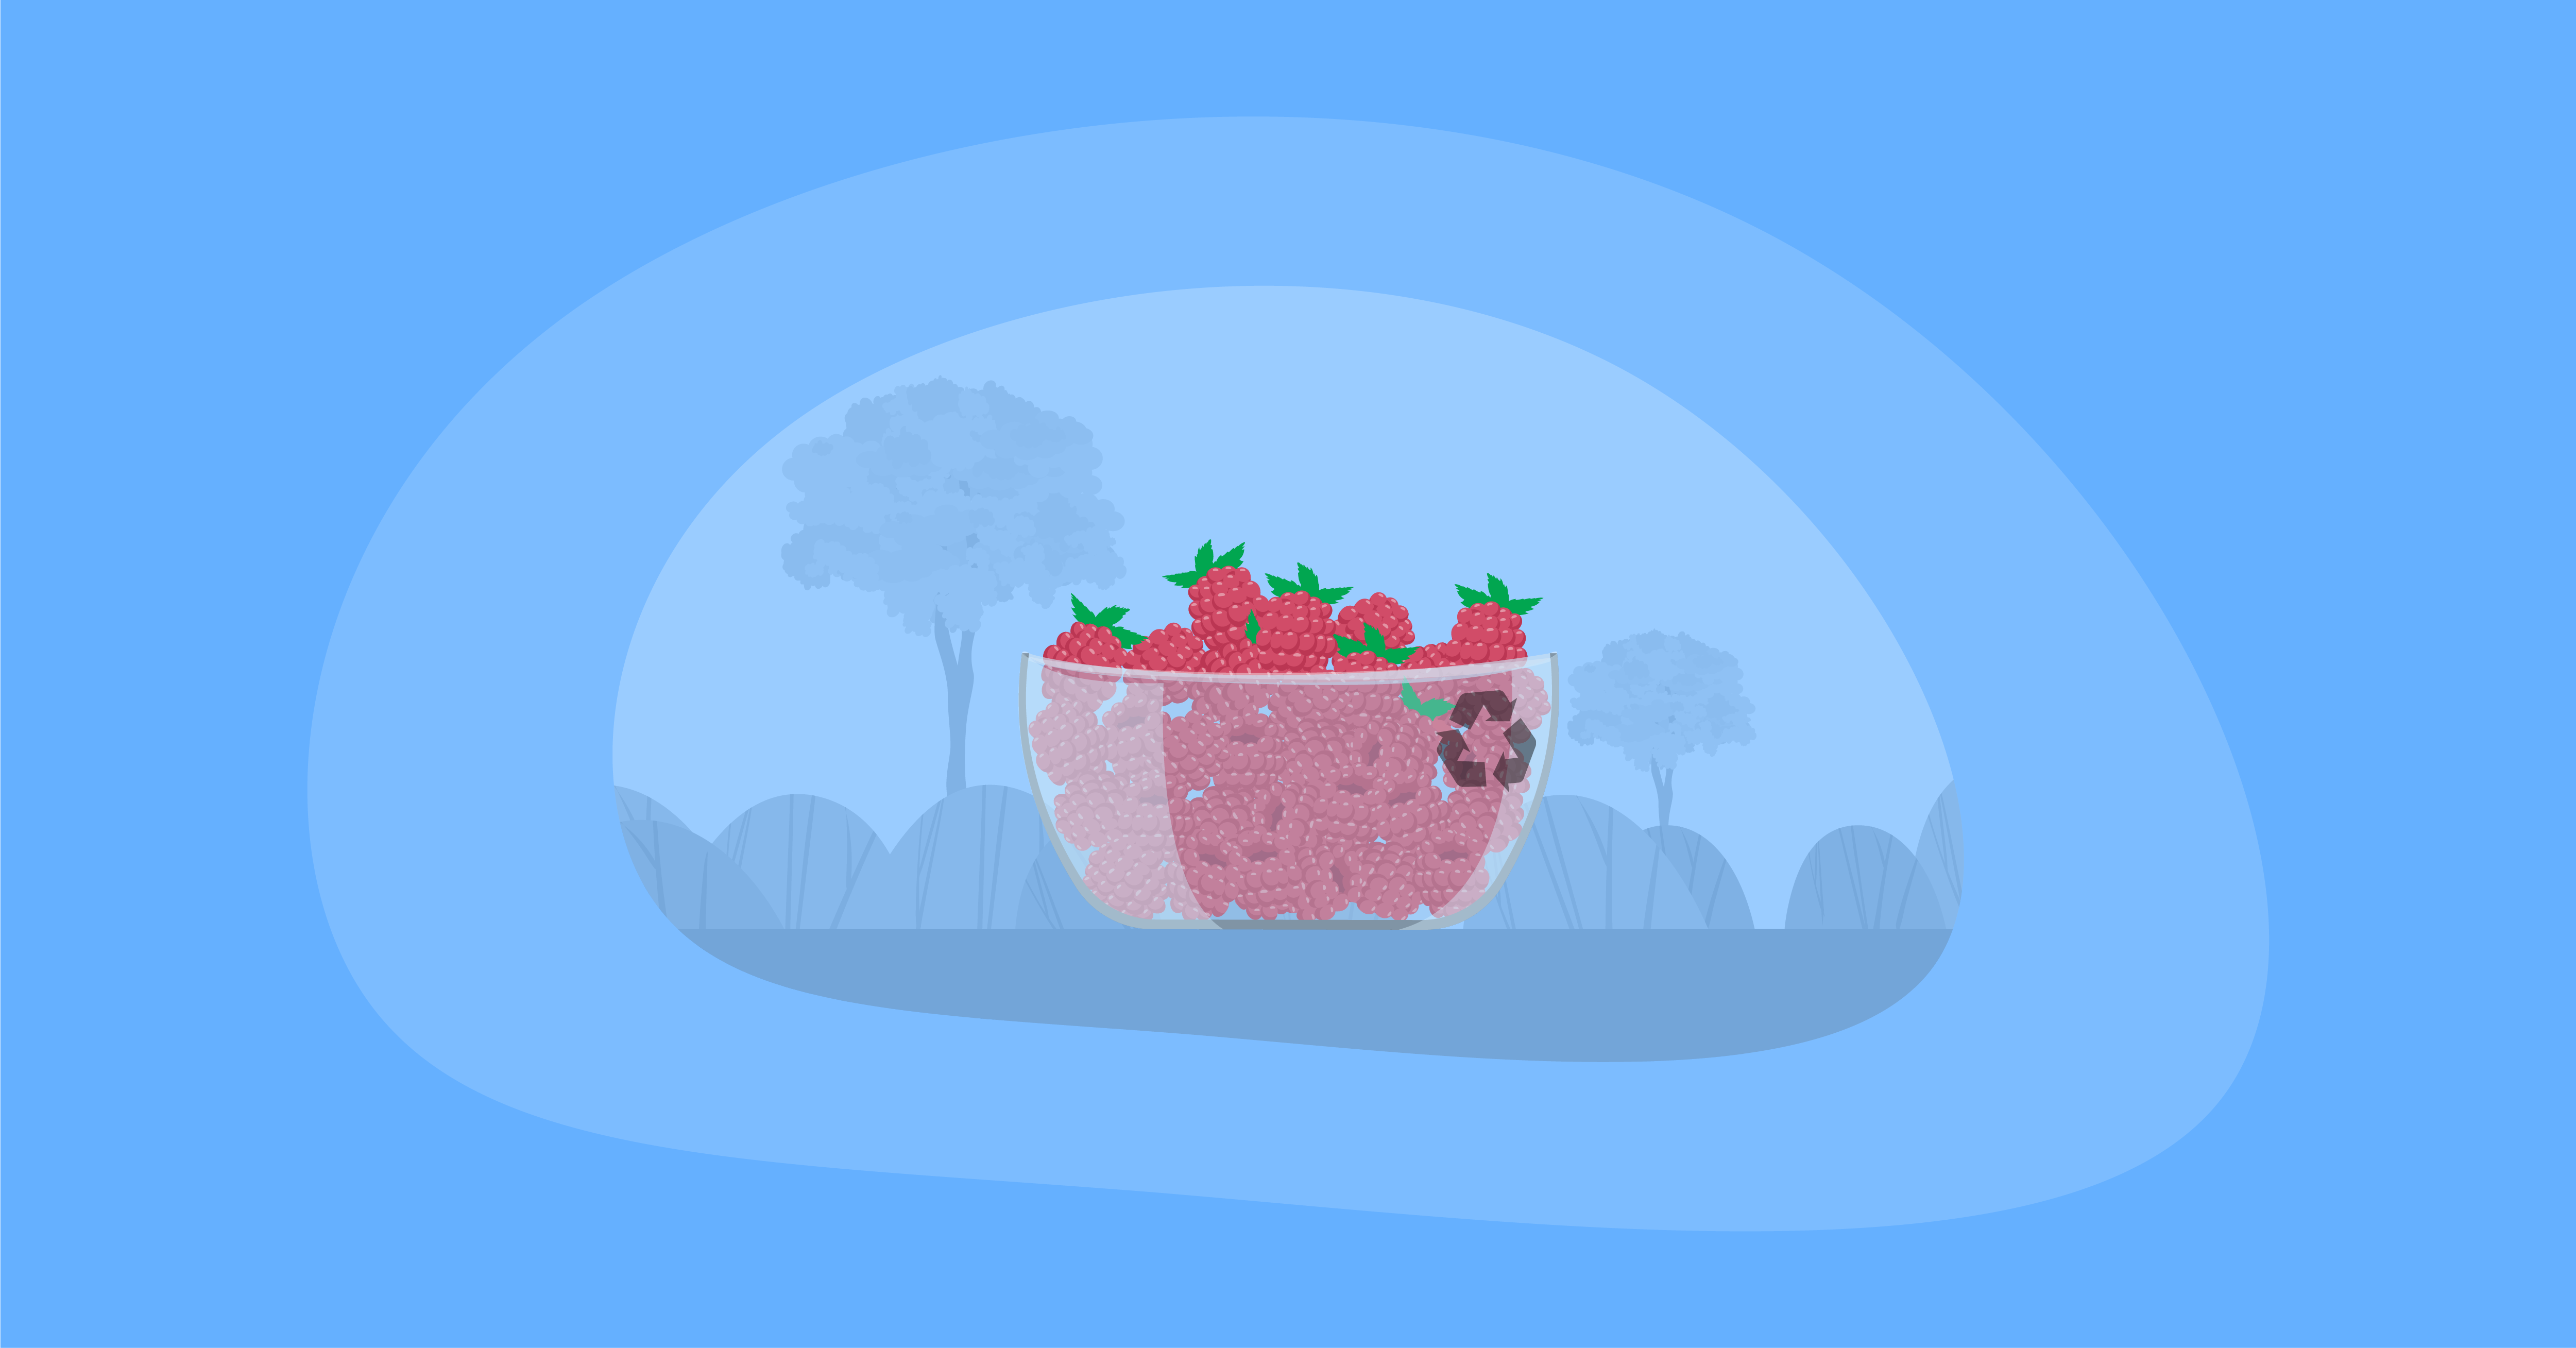 Illustration of raspberries inside a glass bowl